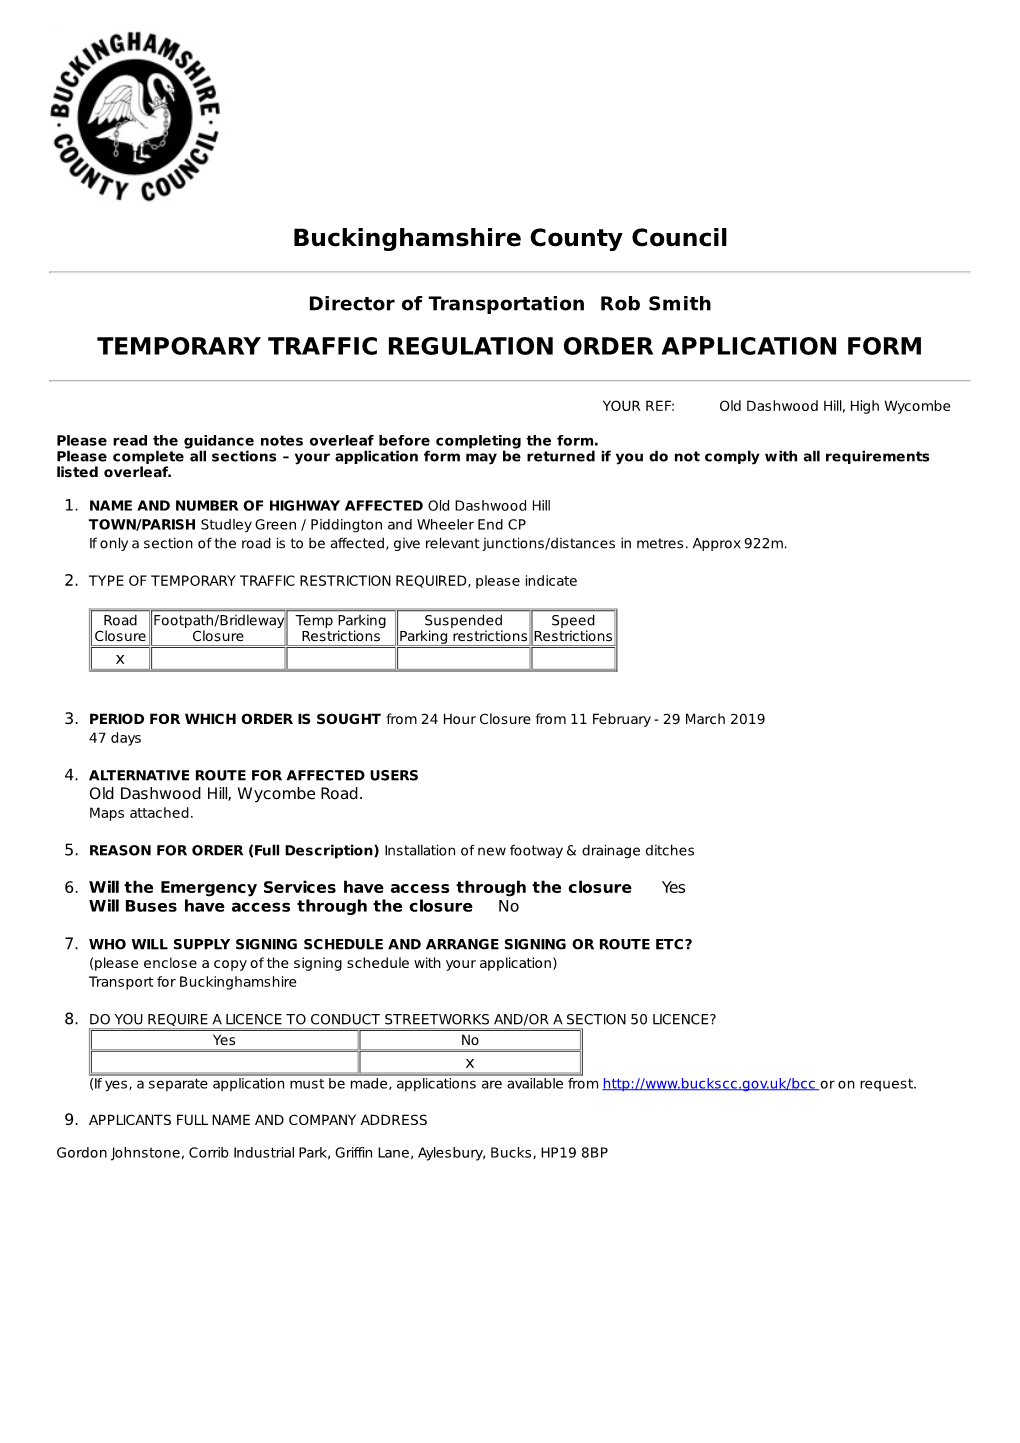 Buckinghamshire County Council TEMPORARY TRAFFIC